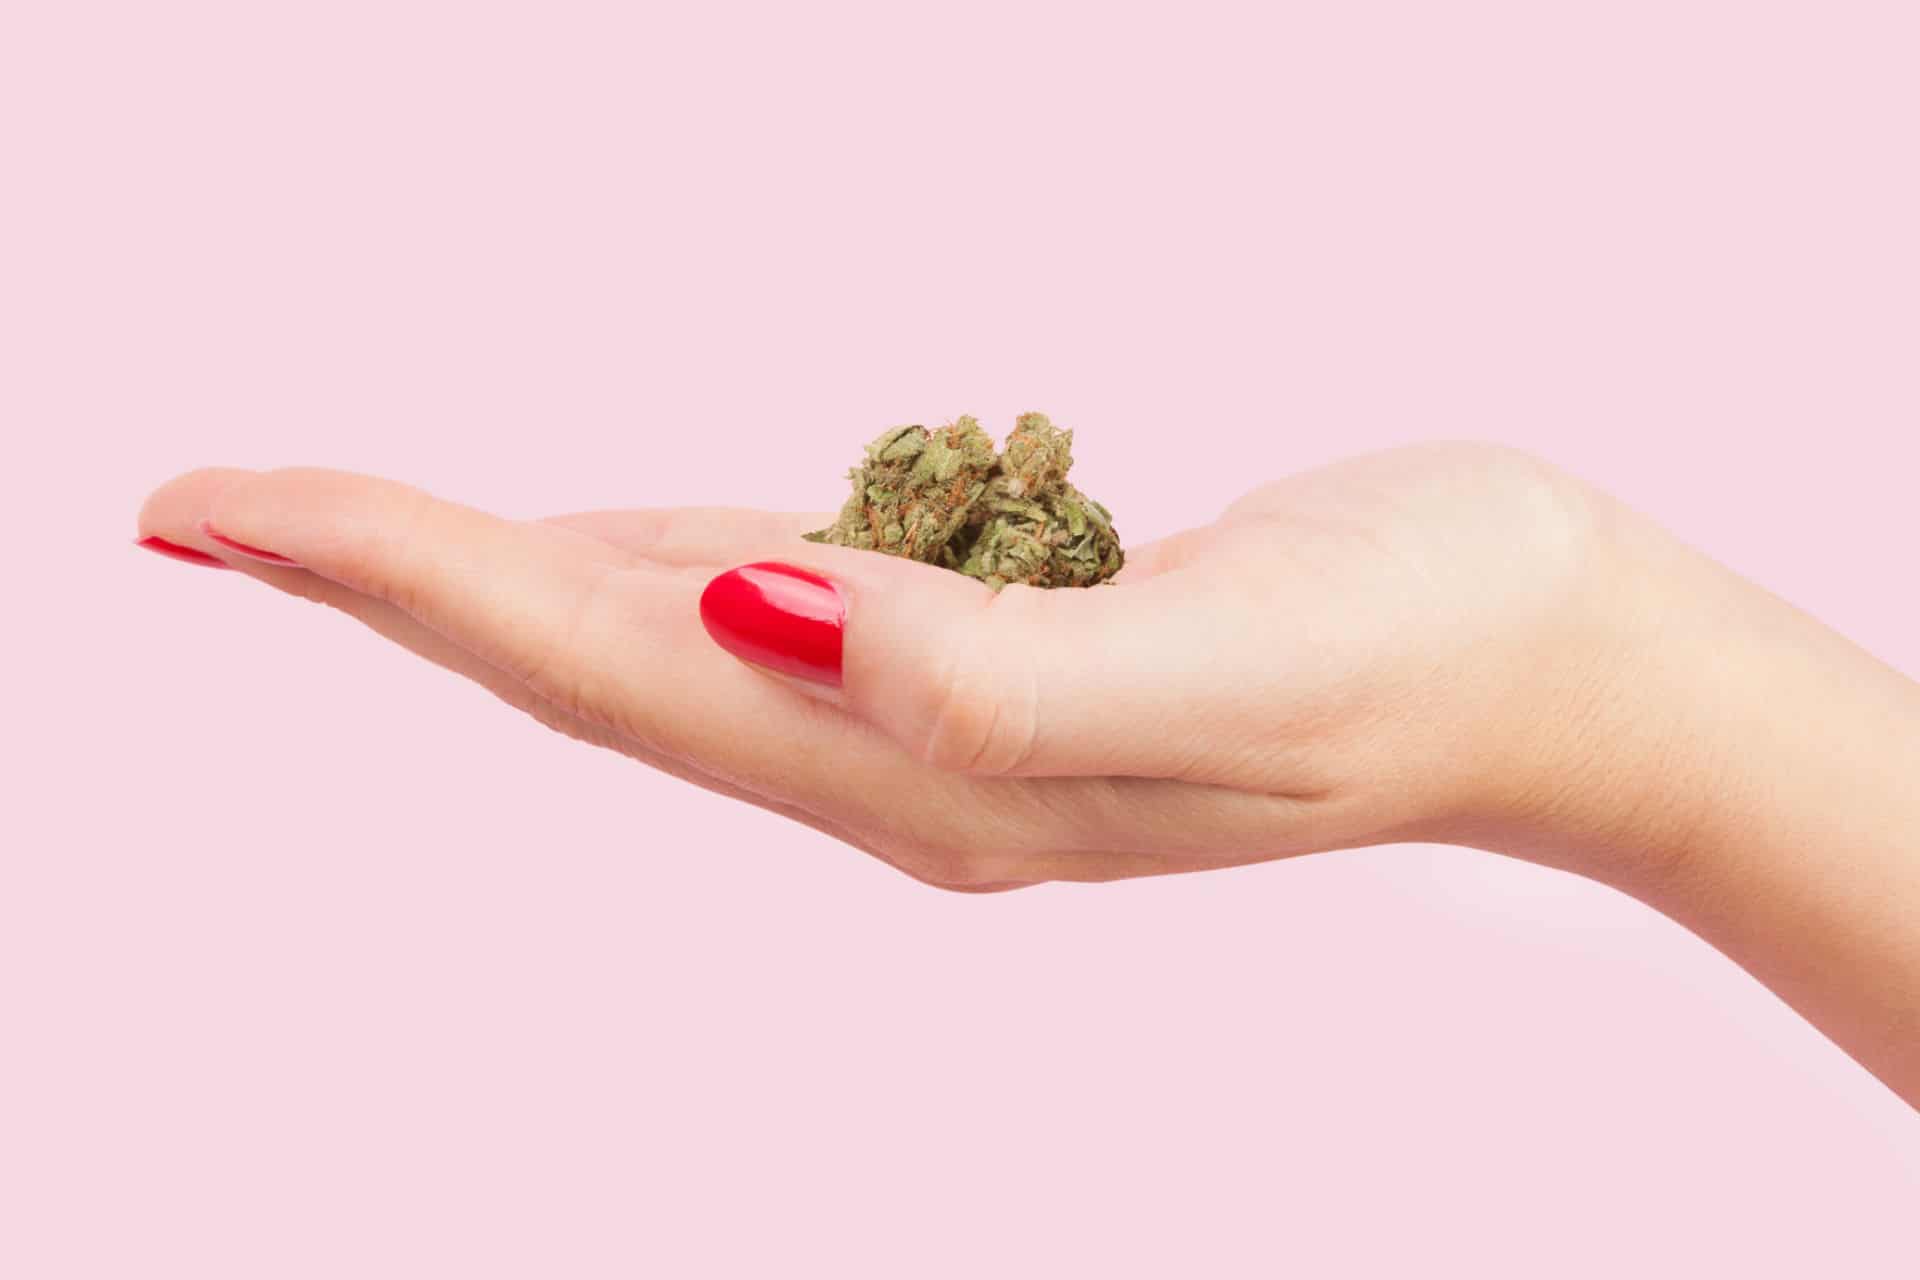 woman's hand with manicure holding a bud of marijuana